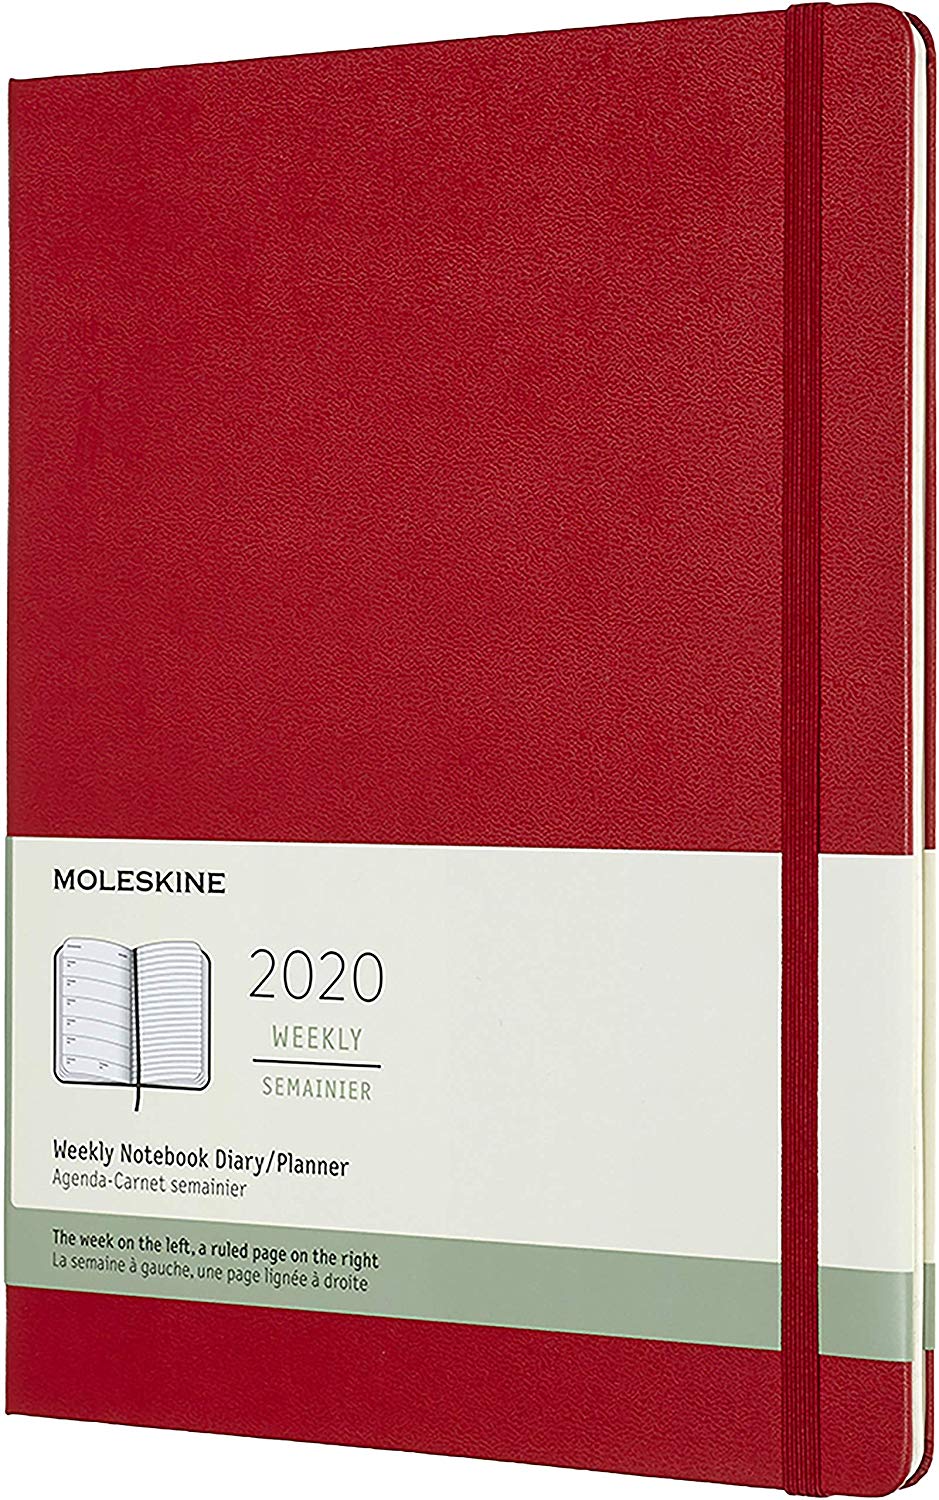 Agenda 2020 - Moleskine 12-Month Weekly Notebook Planner - Scarlet Red, Extra Large, Hard cover | Moleskine